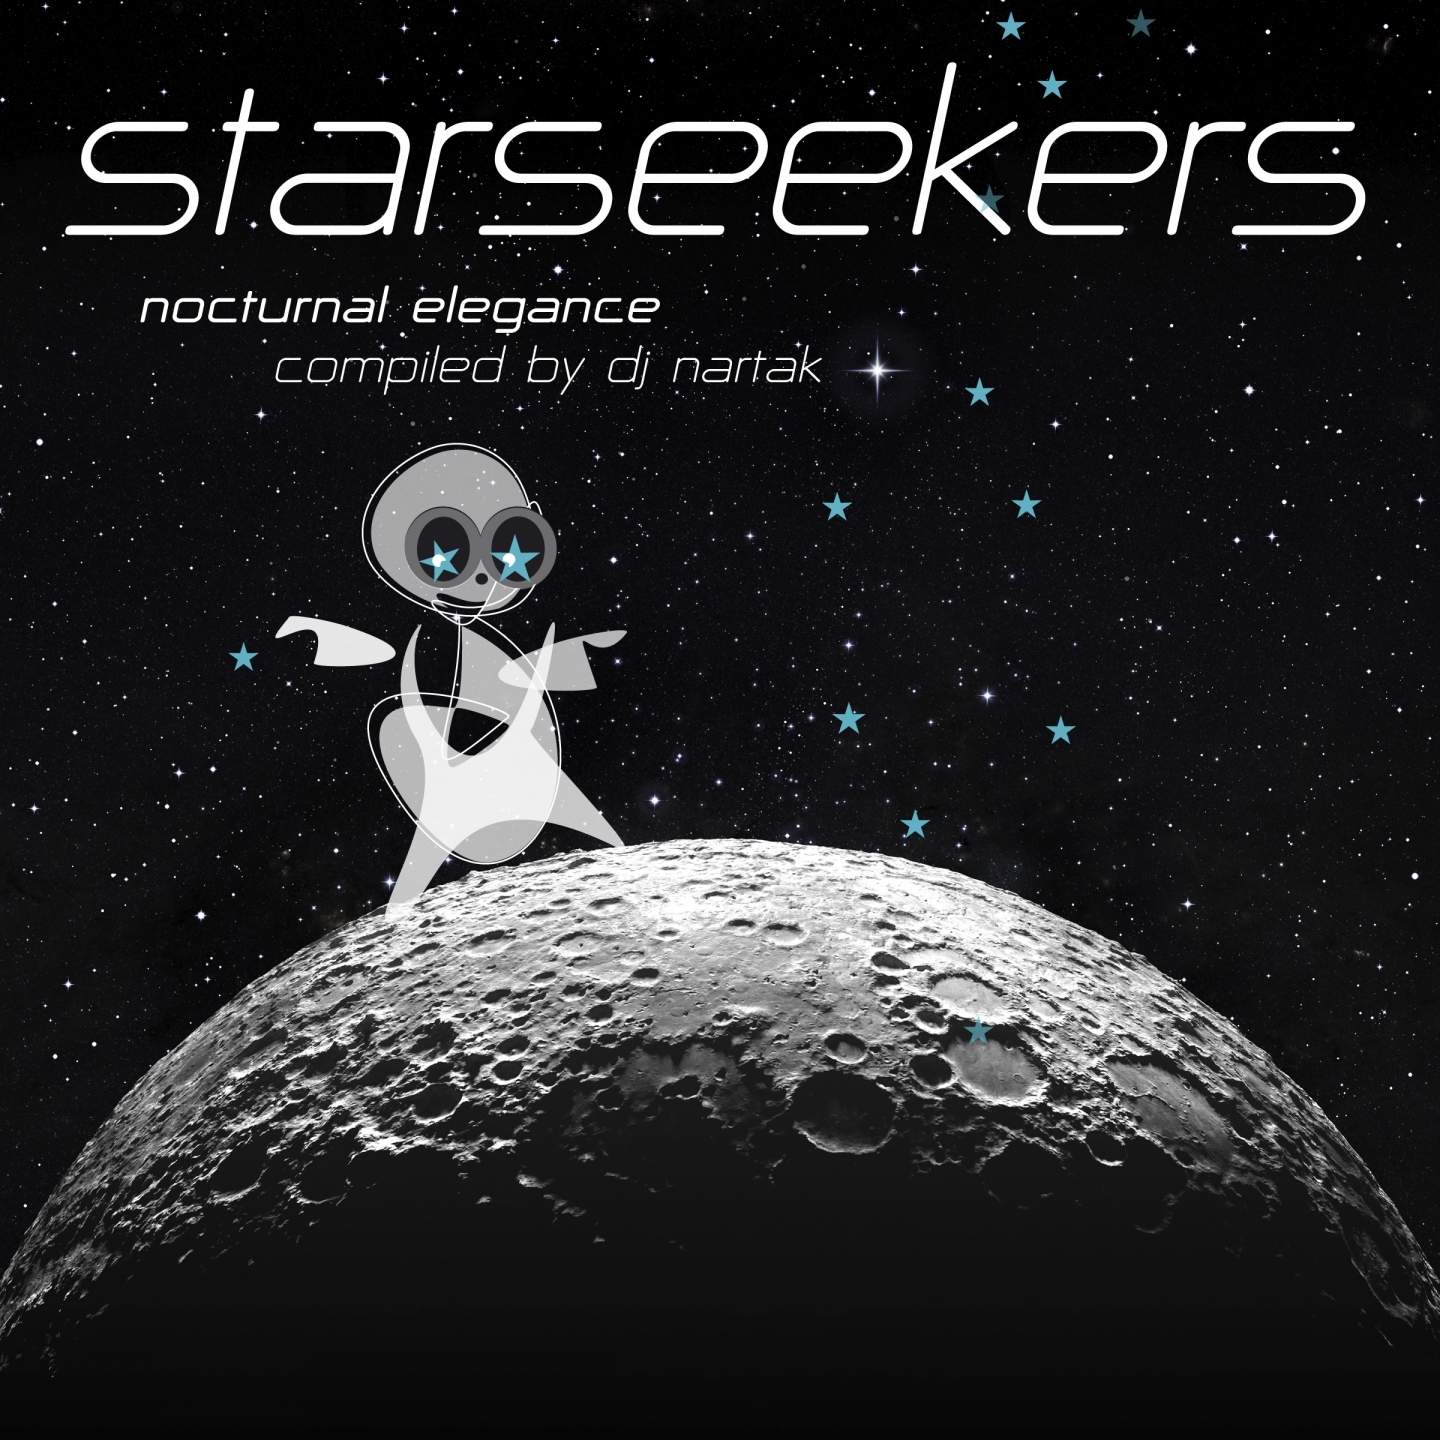 Starseekers (Nocturnal Elegance Compiled by DJ Nartak)